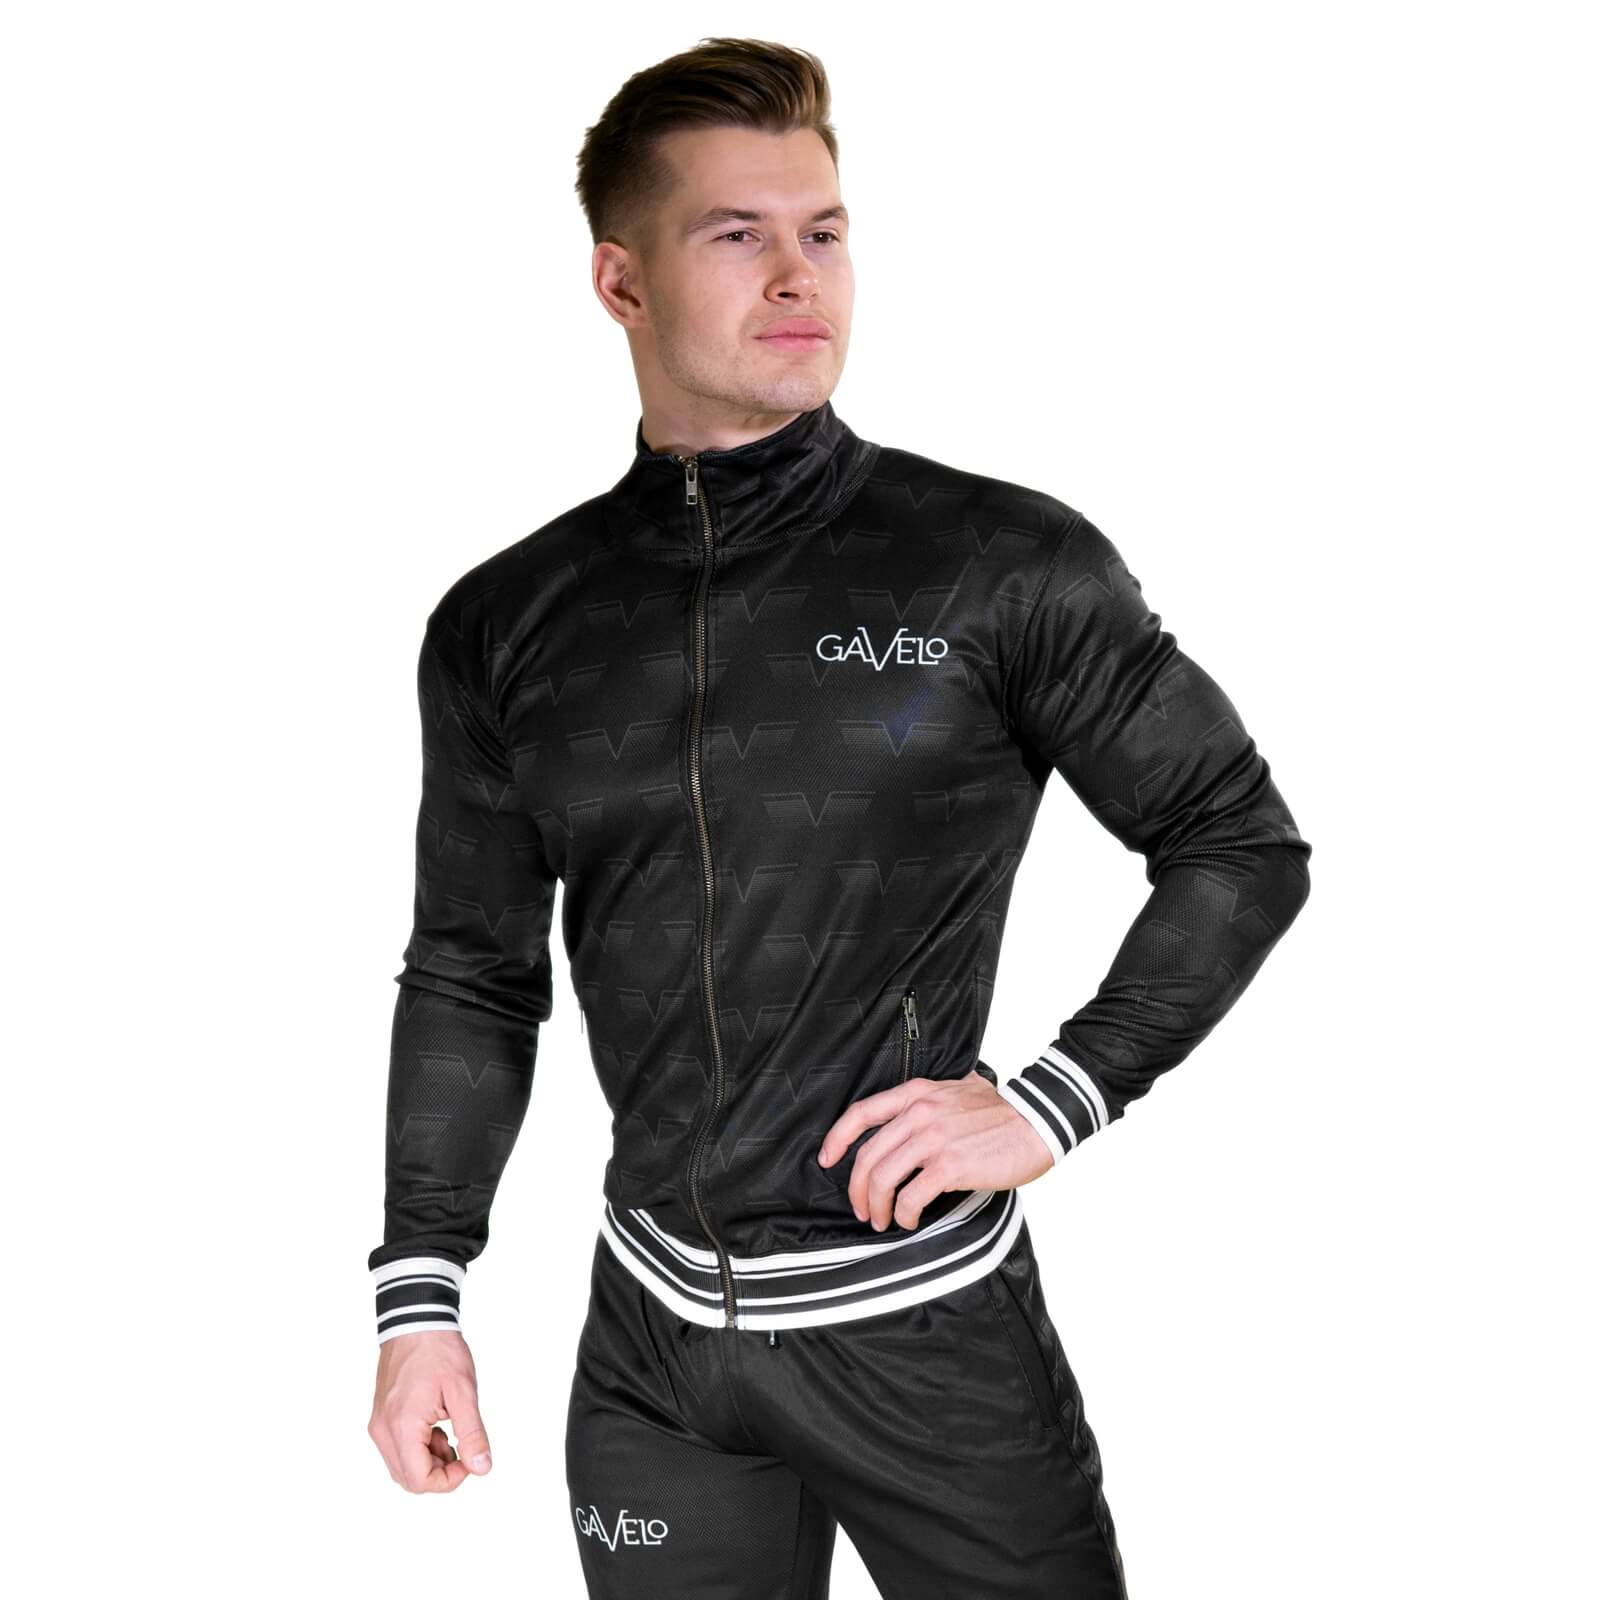 Kolla in Track Jacket, black, Gavelo hos SportGymButiken.se